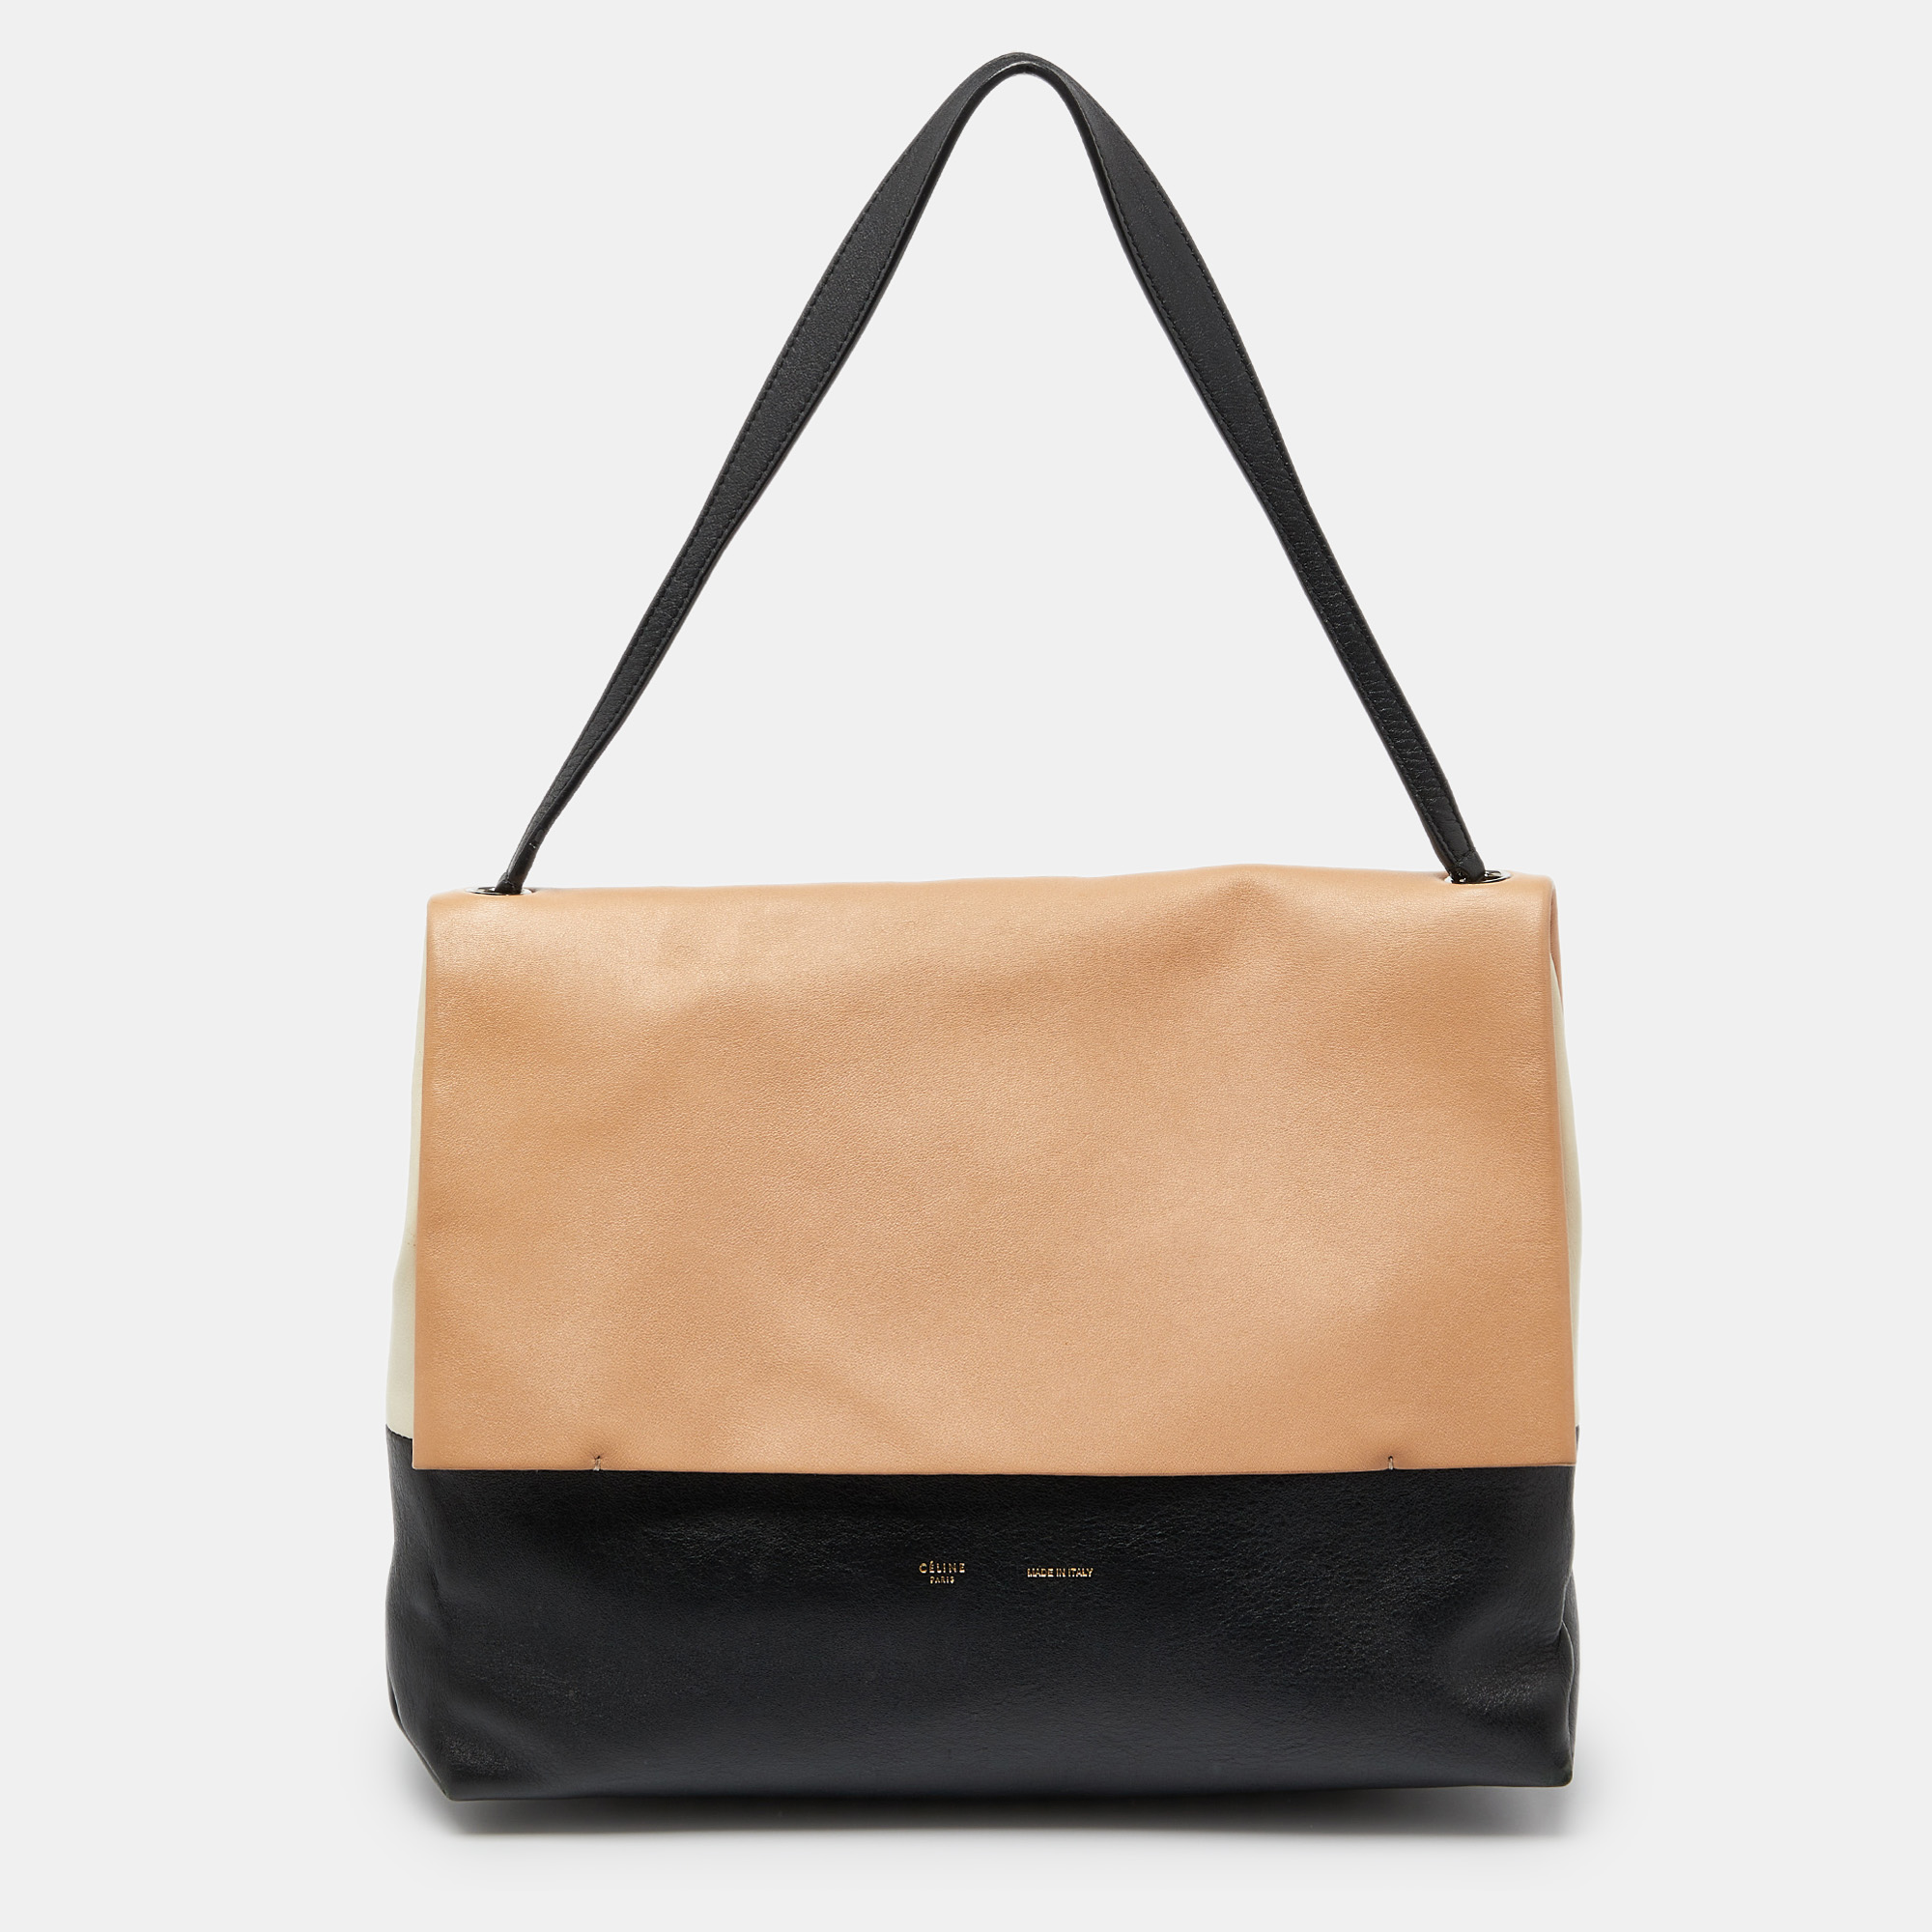 Celine tri color leather all soft top handle bag